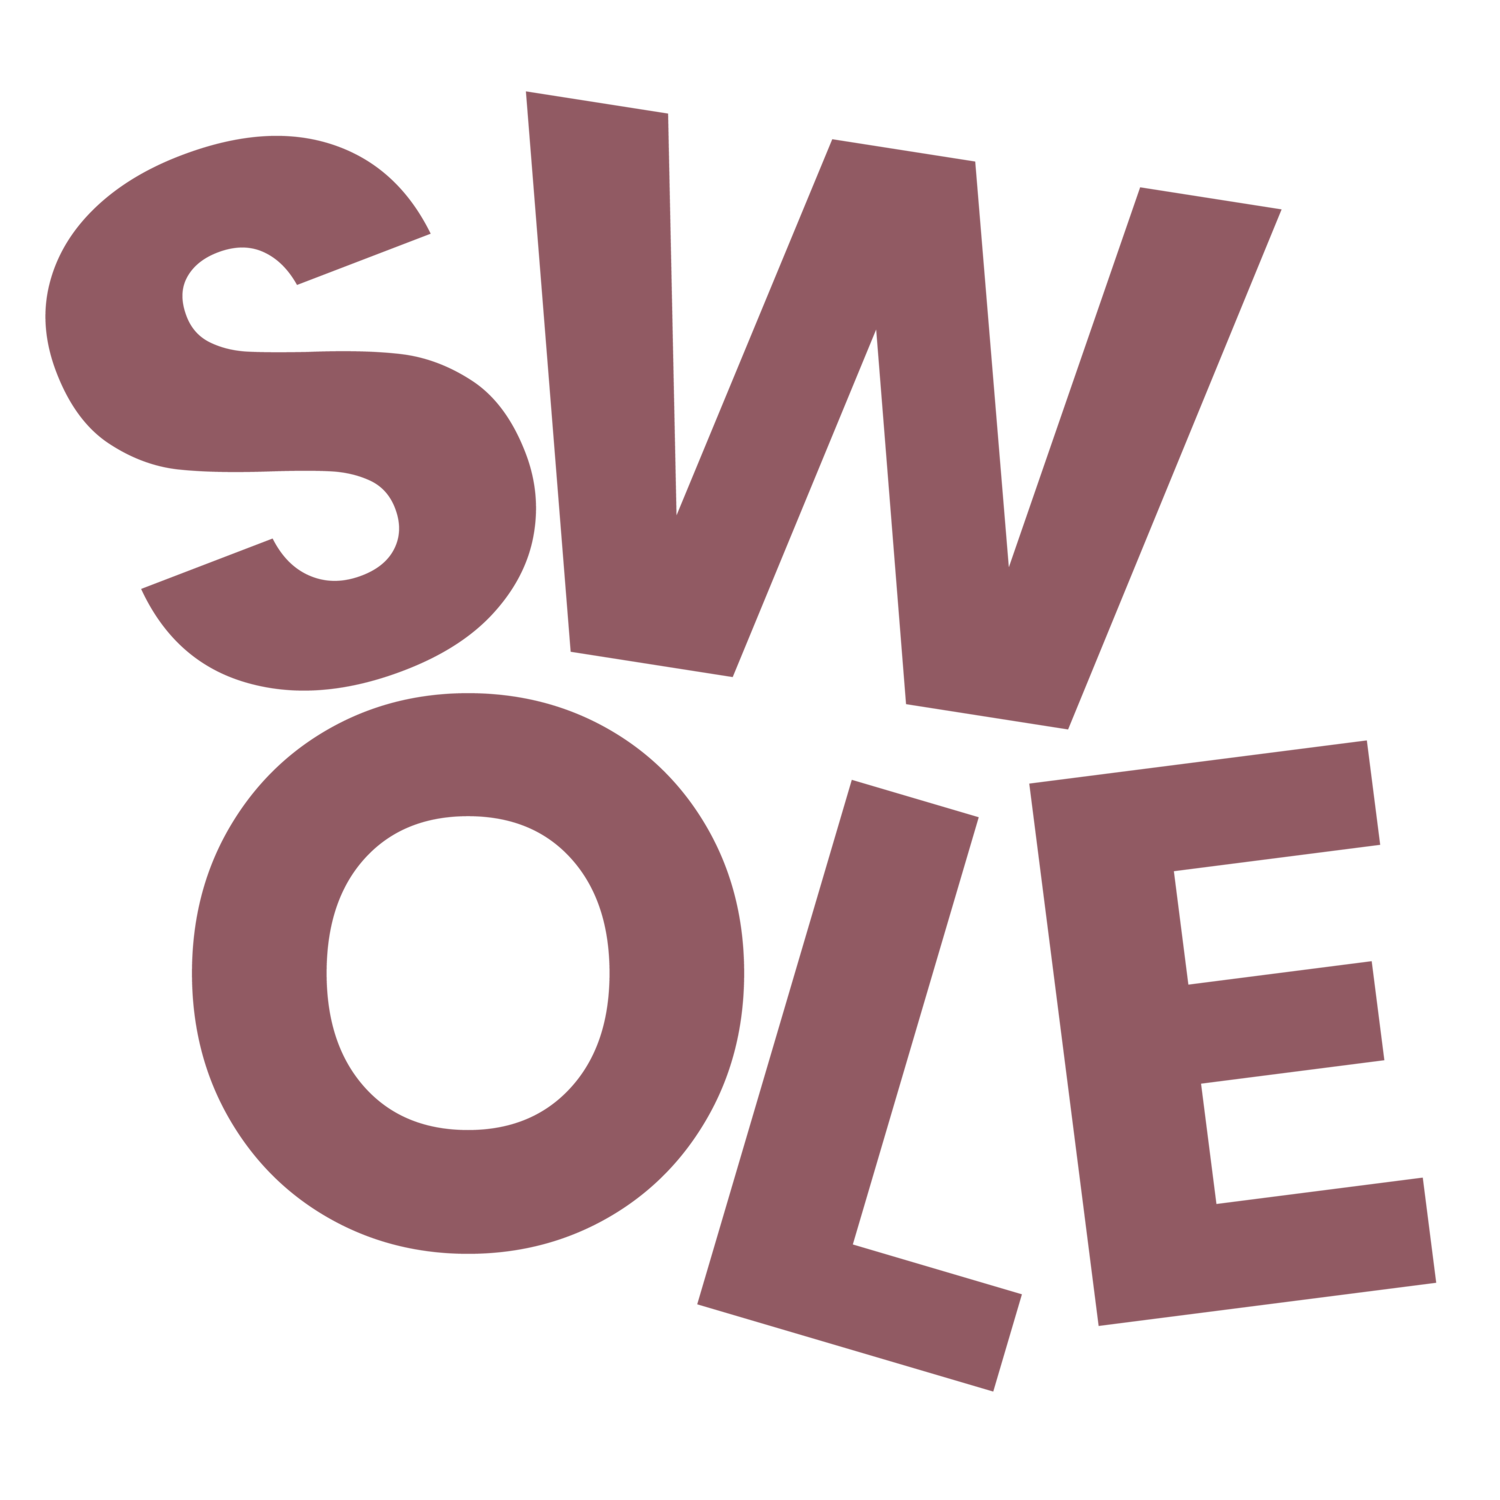 Swole